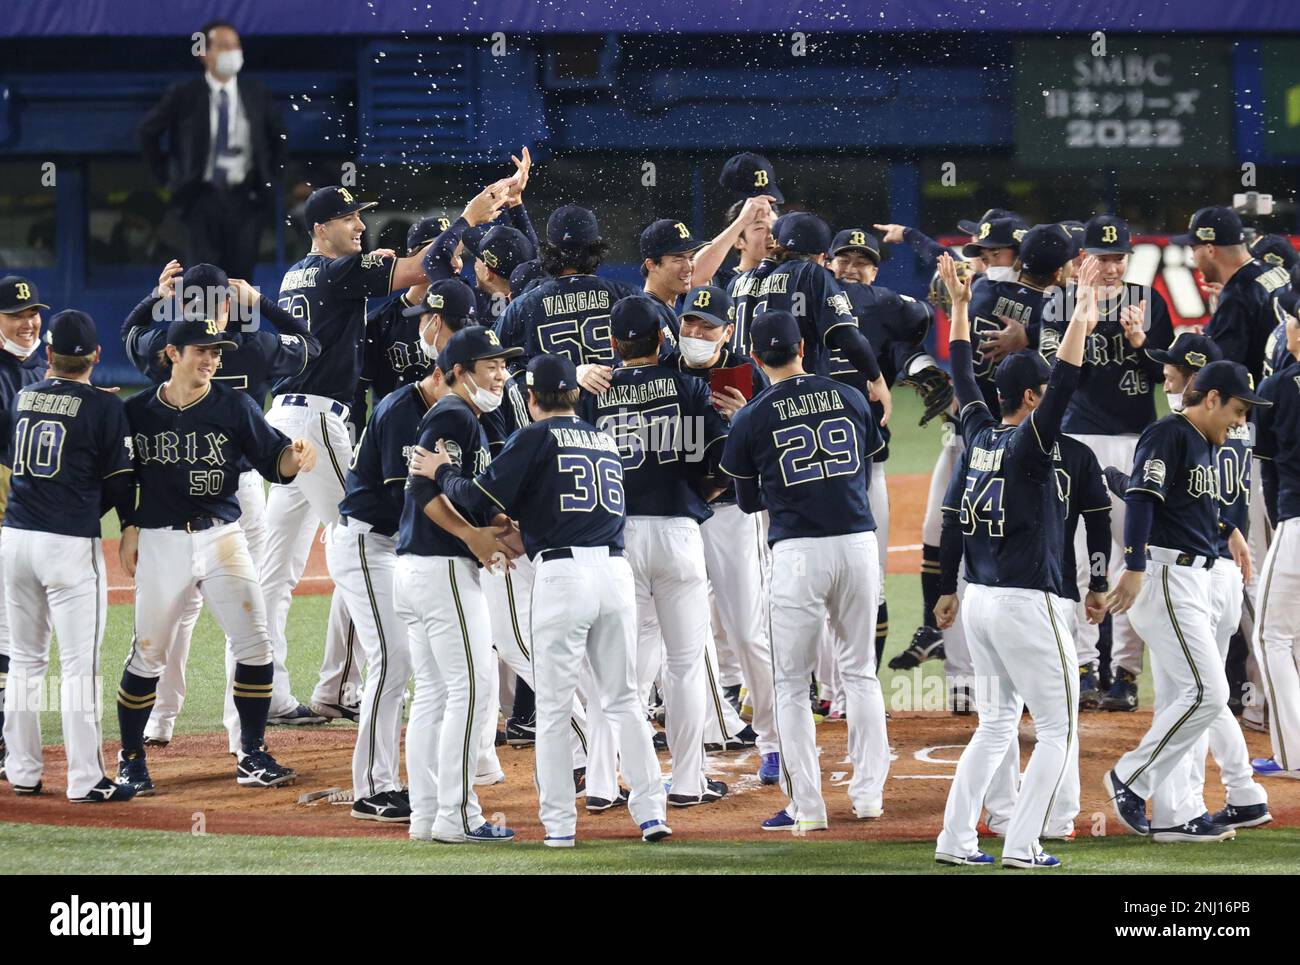 Members of ORIX Buffaloes celebrate after winning 2022 Japan Series of NPB (Nippon Professional Baseball) against Tokyo Yakult Swallows at Meiji Jingu Stadium in Shinjuku Ward, Tokyo on October 30, 2022